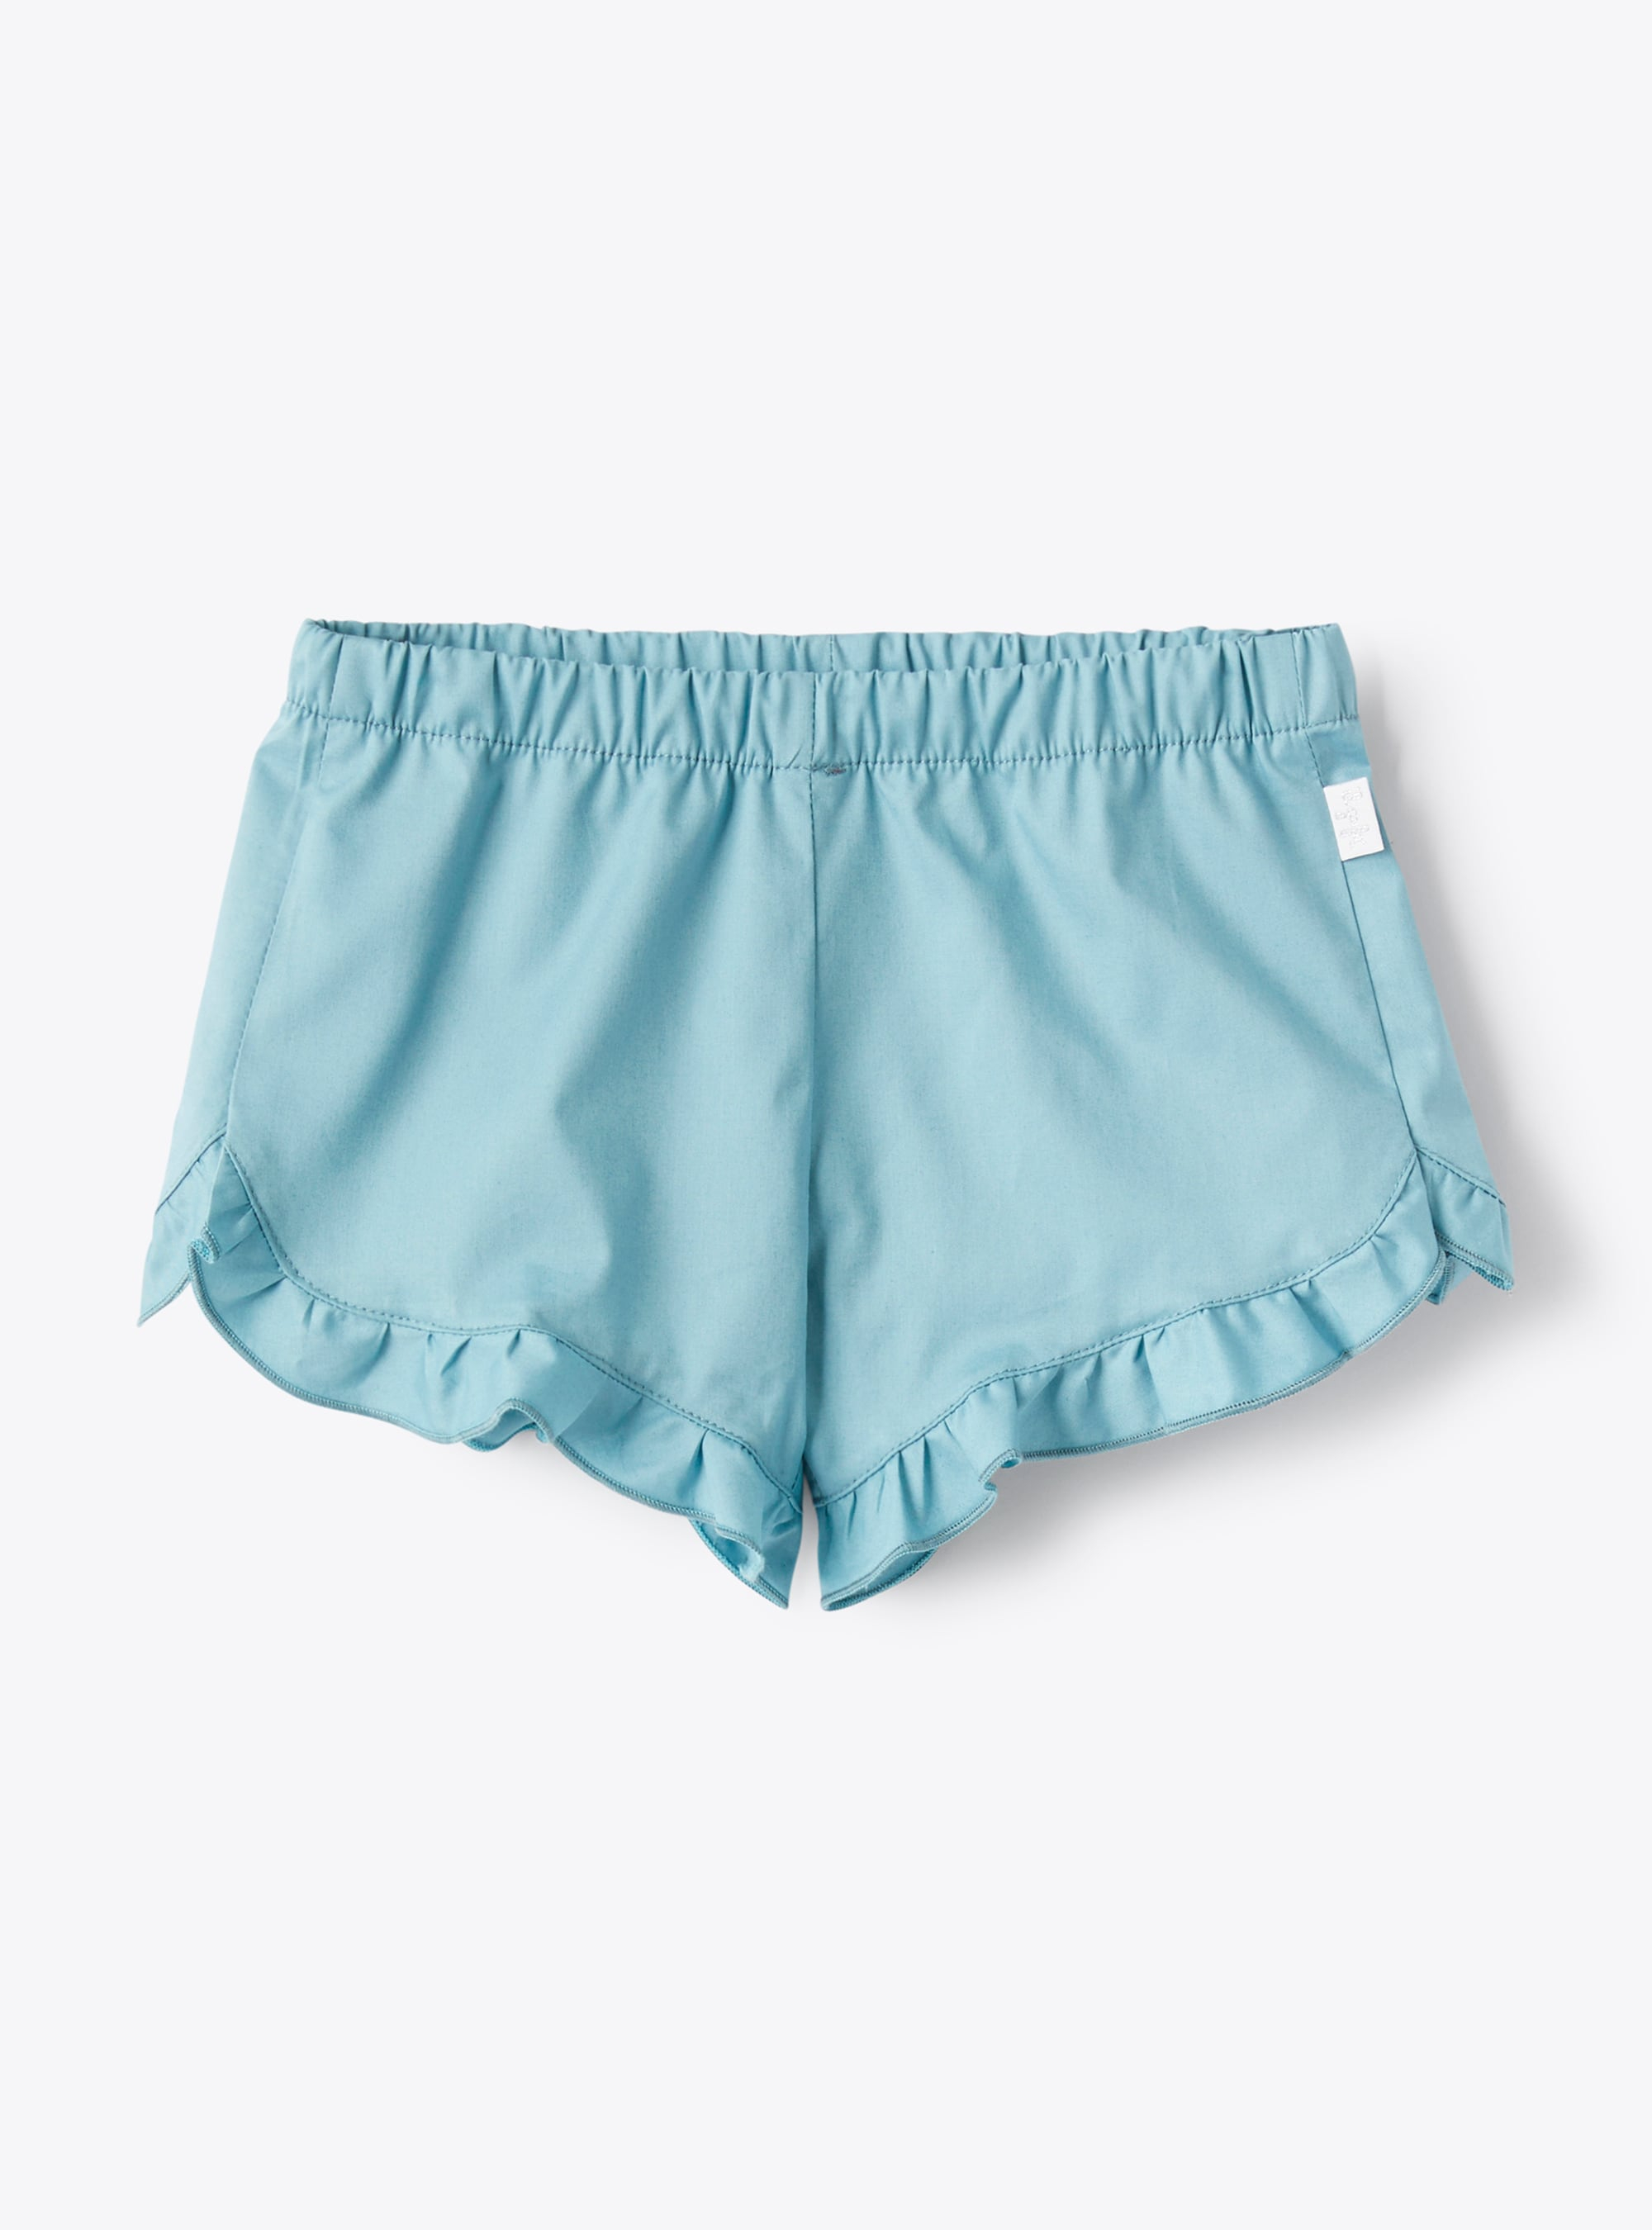 Shorts in stretch sea-green poplin - Light blue | Il Gufo